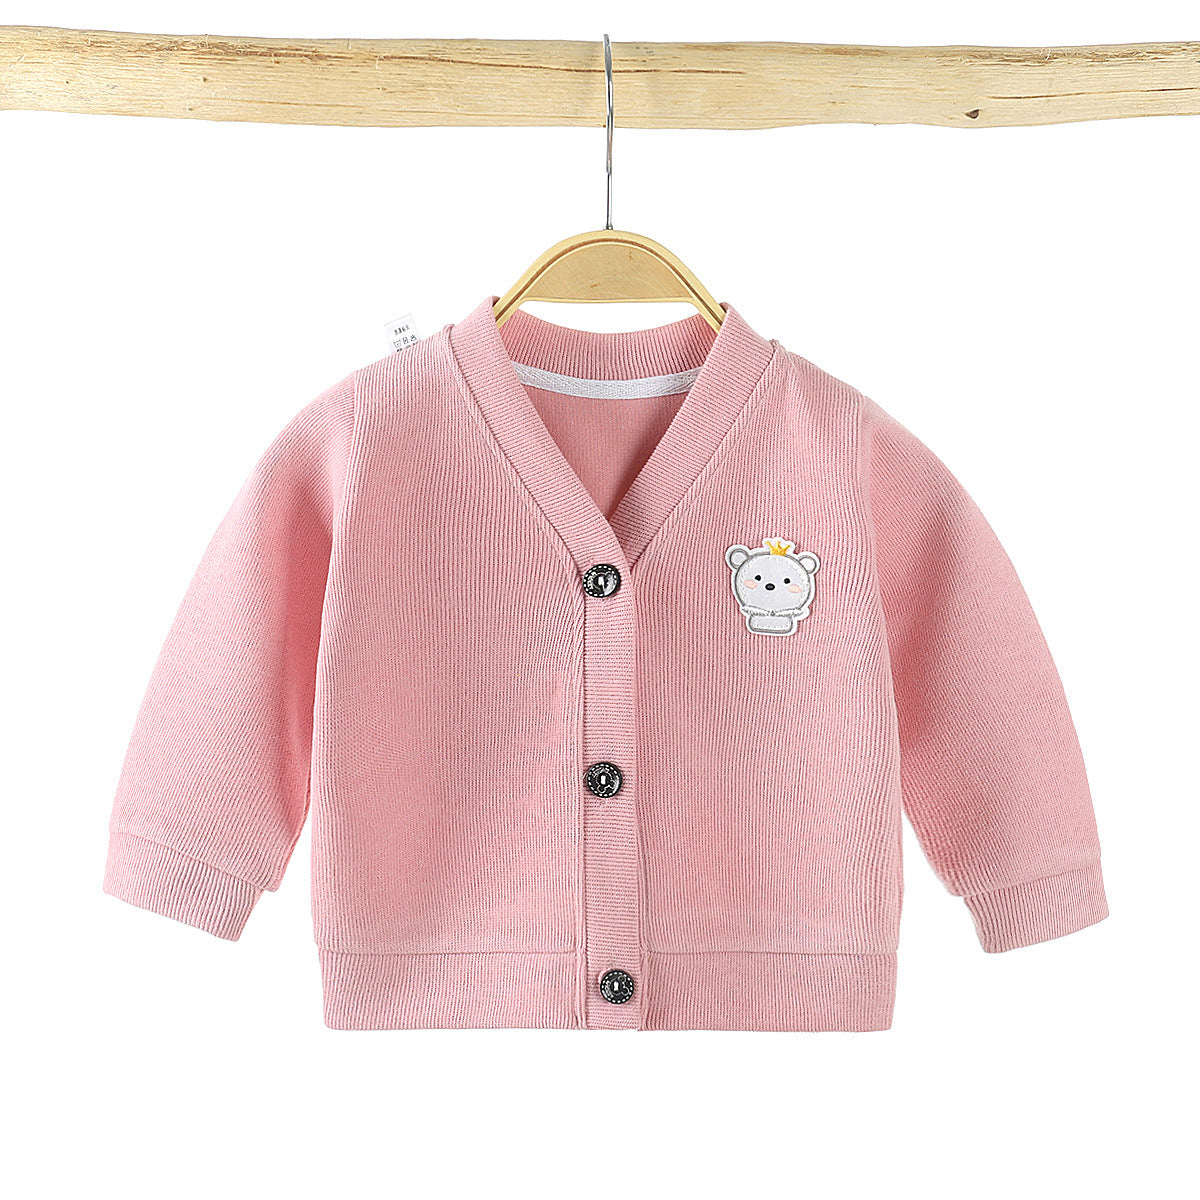 Baby Knitwear Cardigan Jacket Infant Clothing Girls